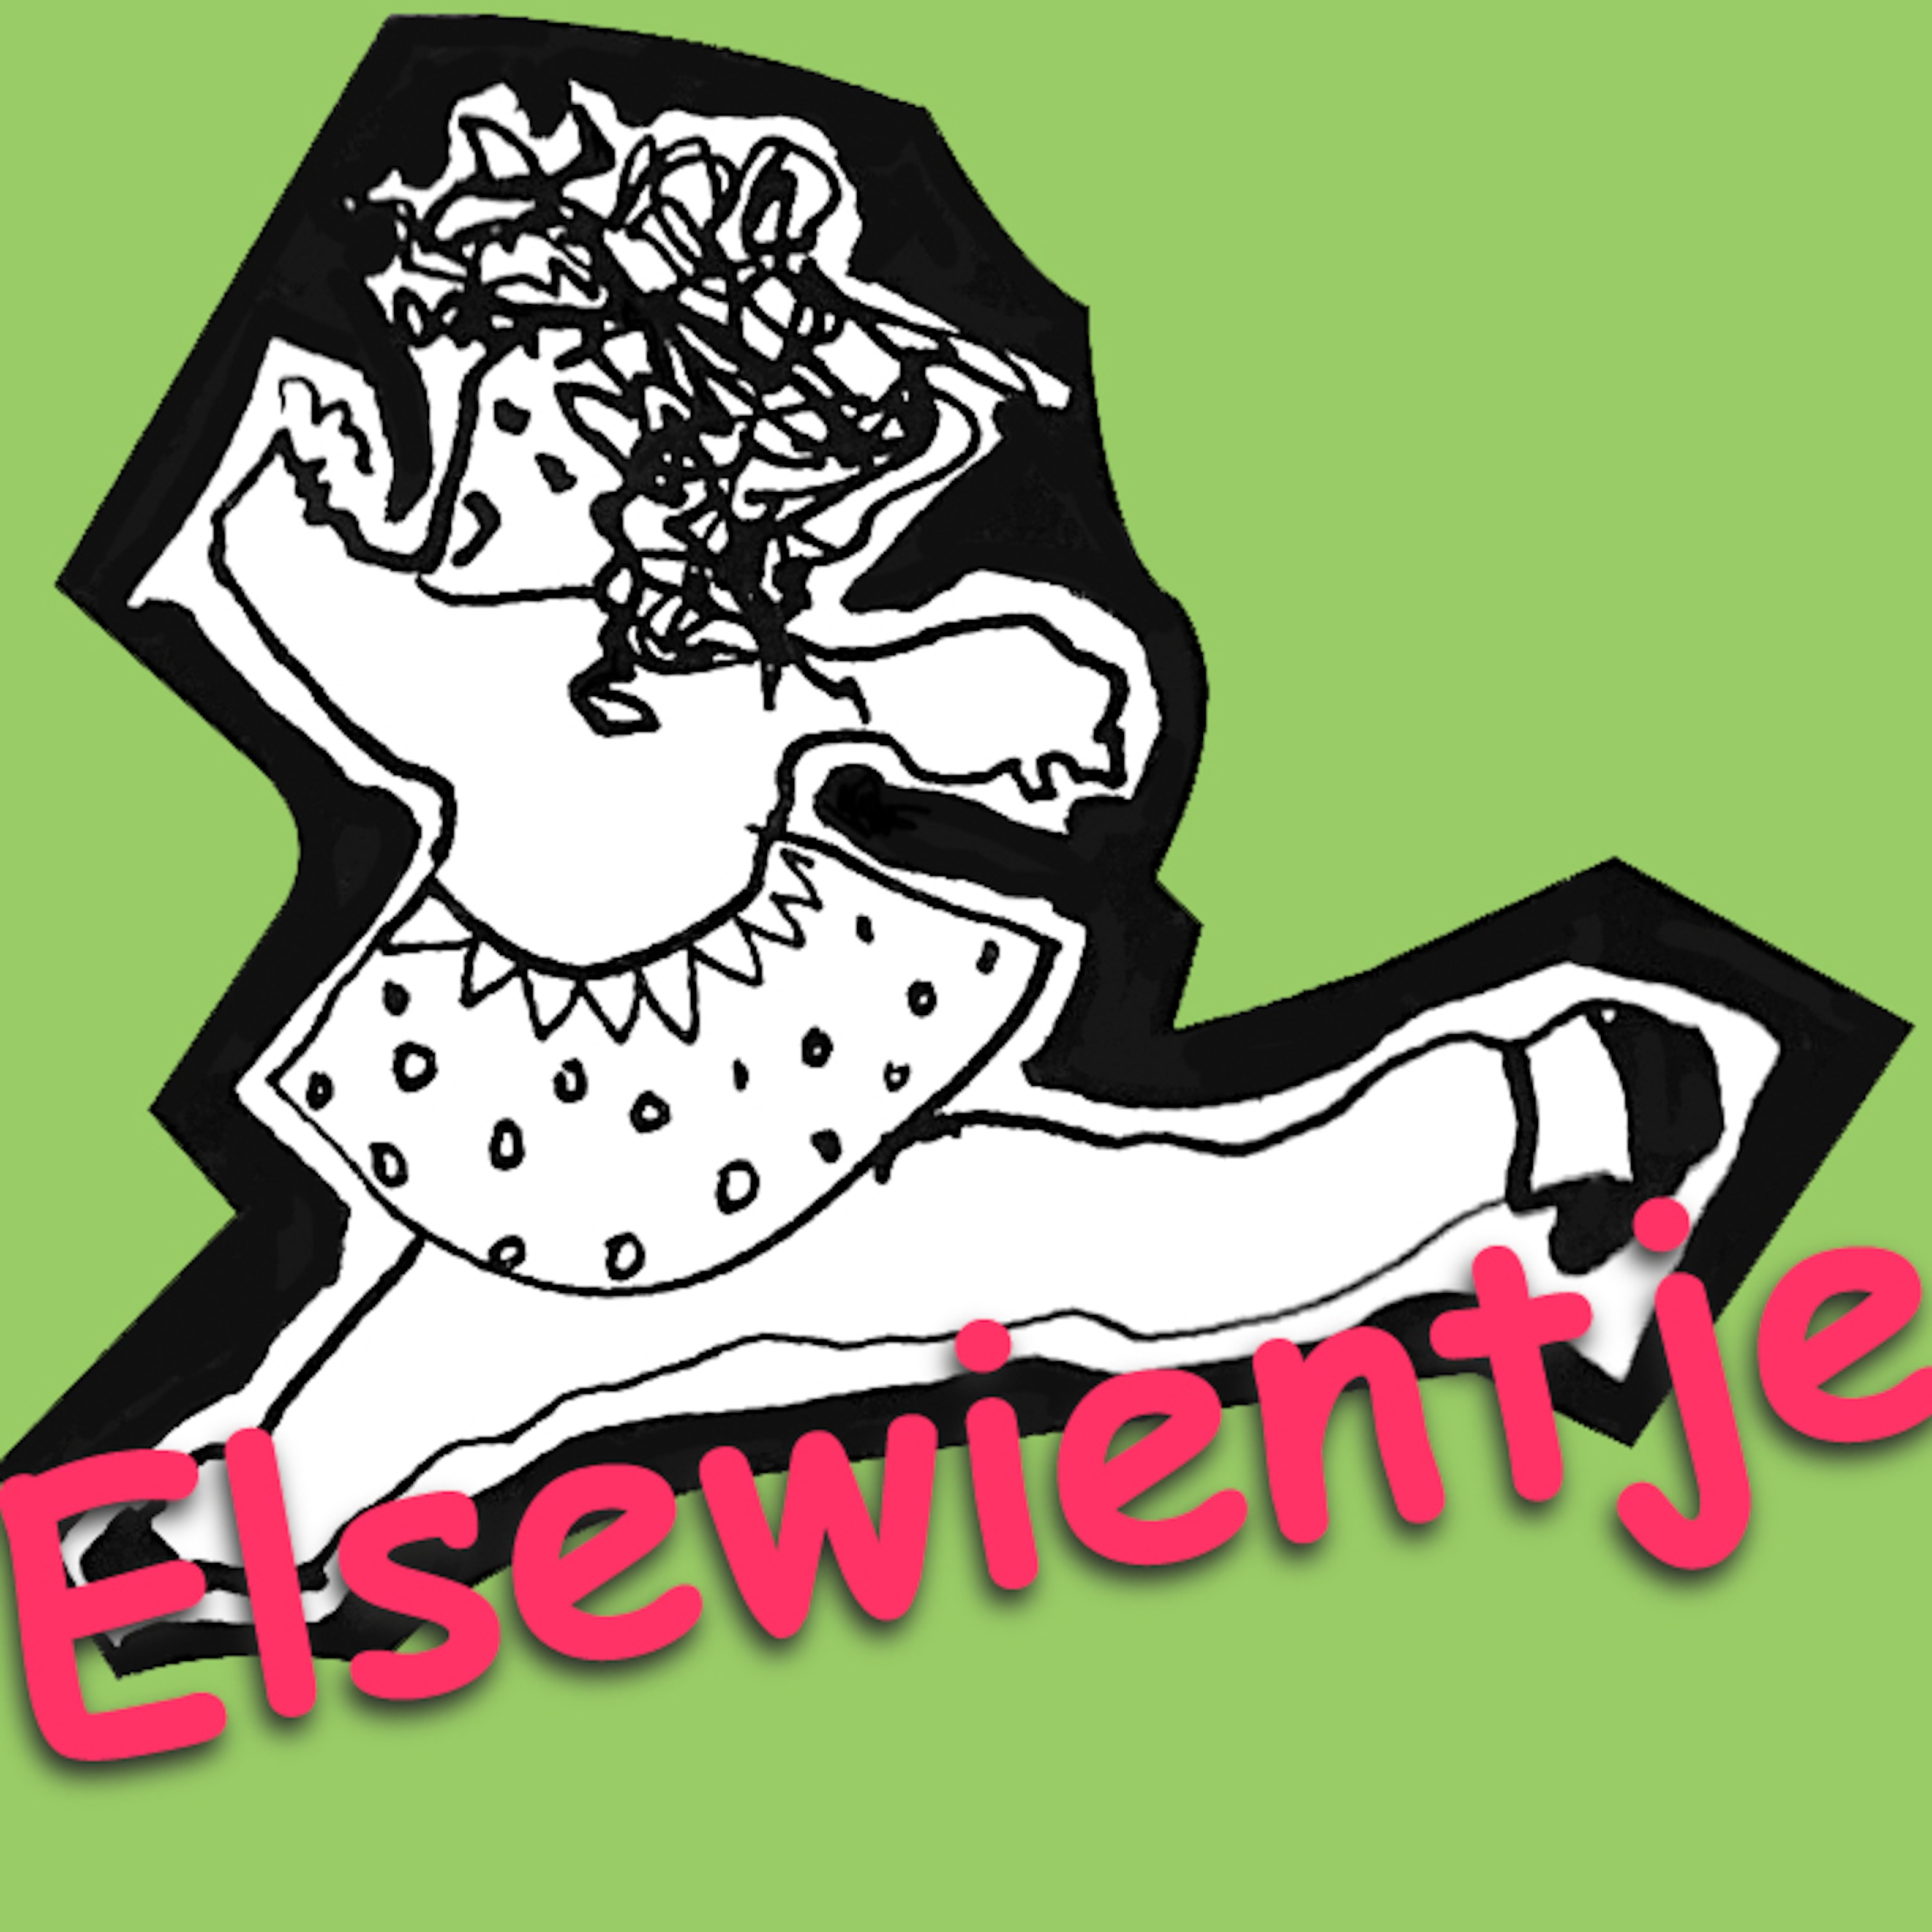 Elsewientje logo